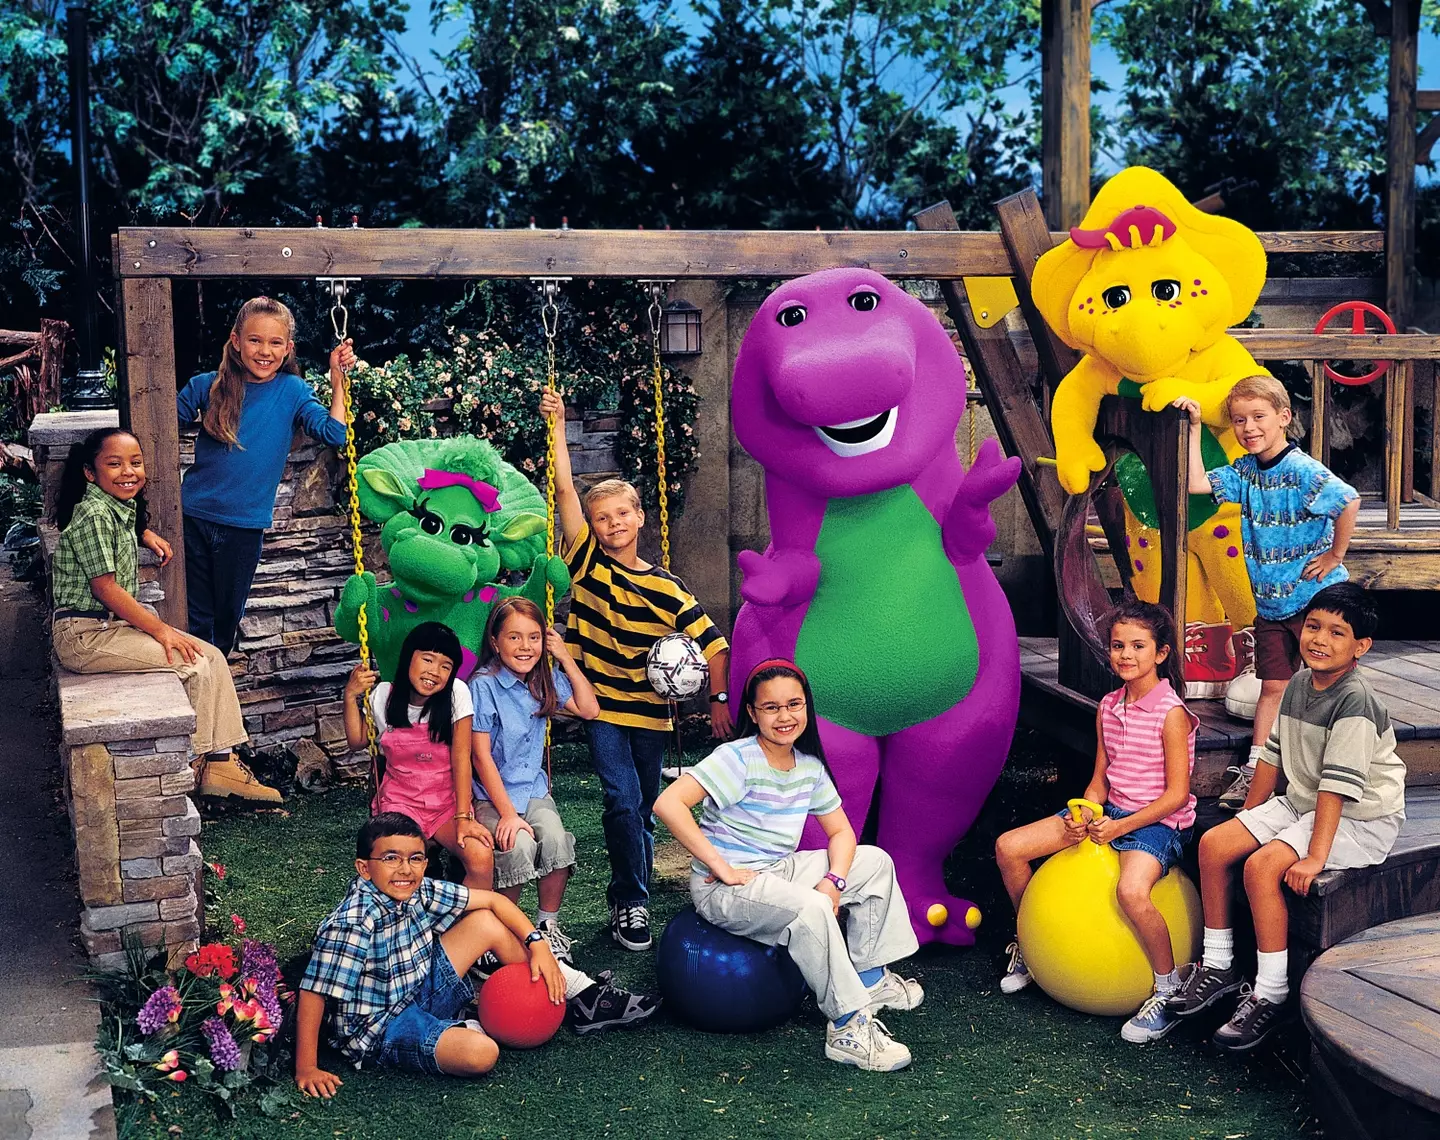 BARNEY AND FRIENDS, Barney the dinosaur, Selena Gomez (on yellow ball), Demi Lovato (wearing glasses and red headband) (1992).